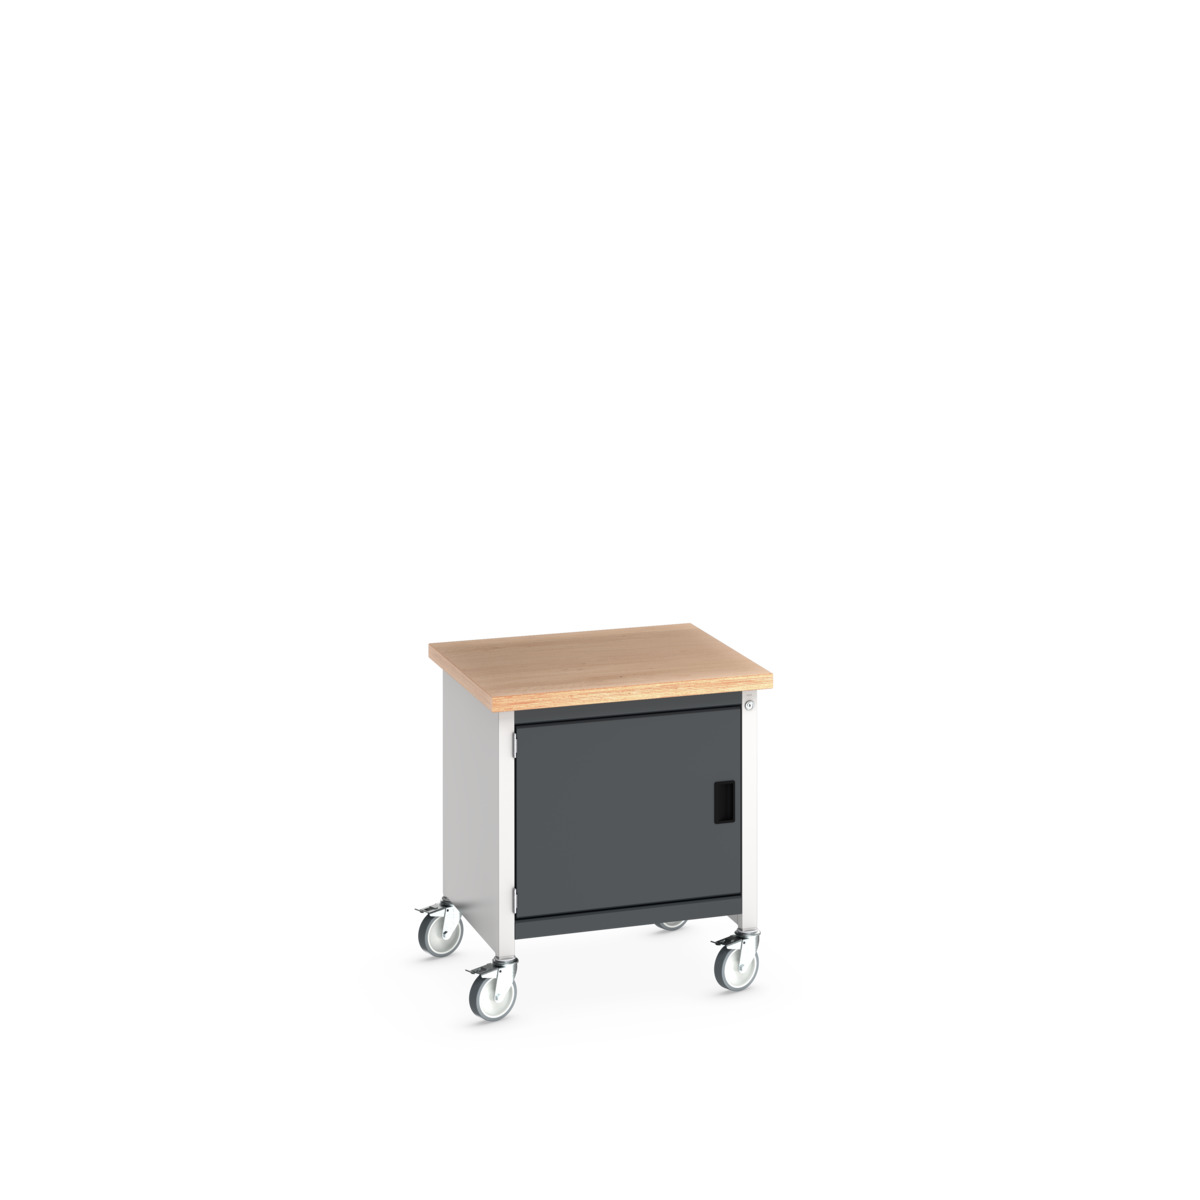 41002085. - cubio mobile storage bench (mpx)